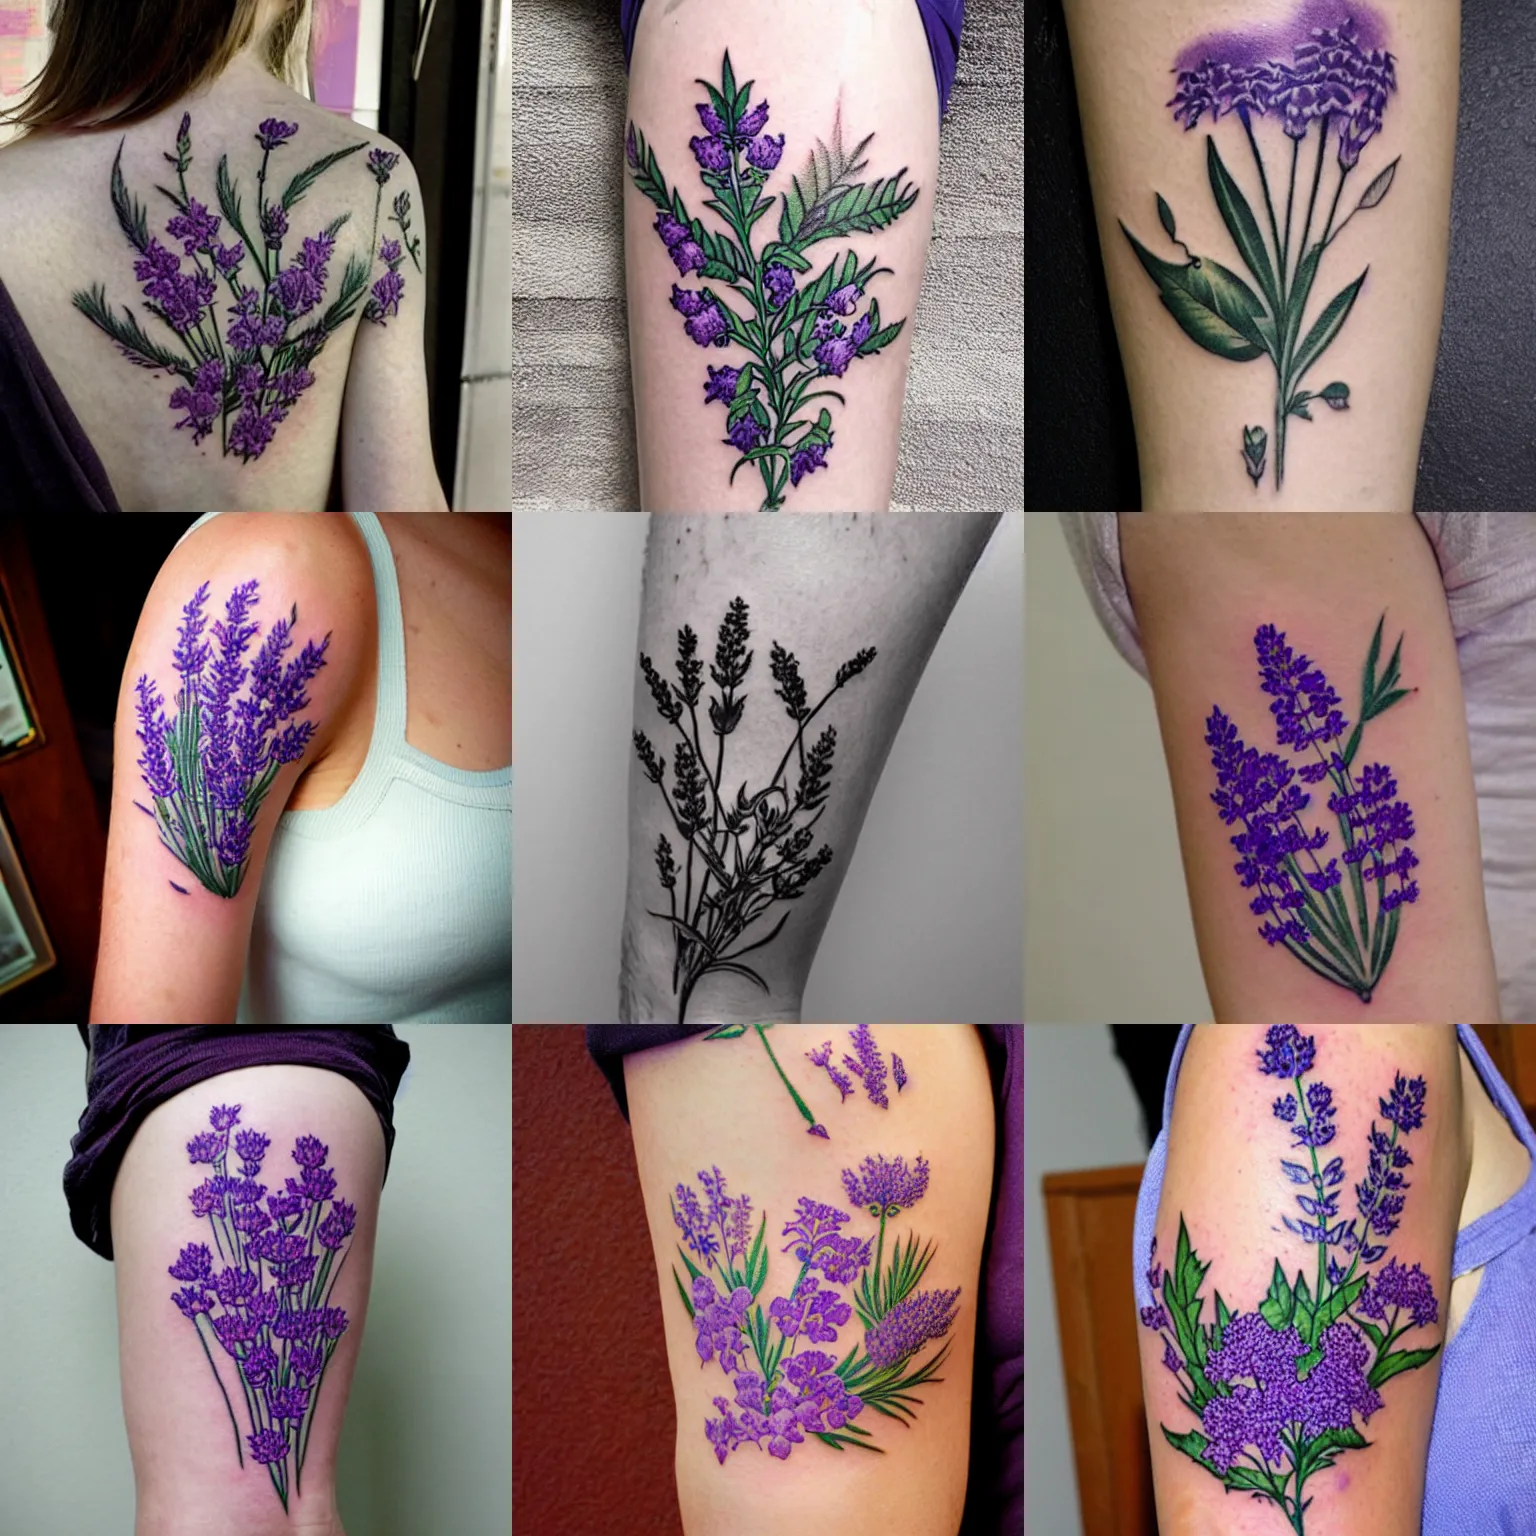 Matching lavender bouquet tattoos.